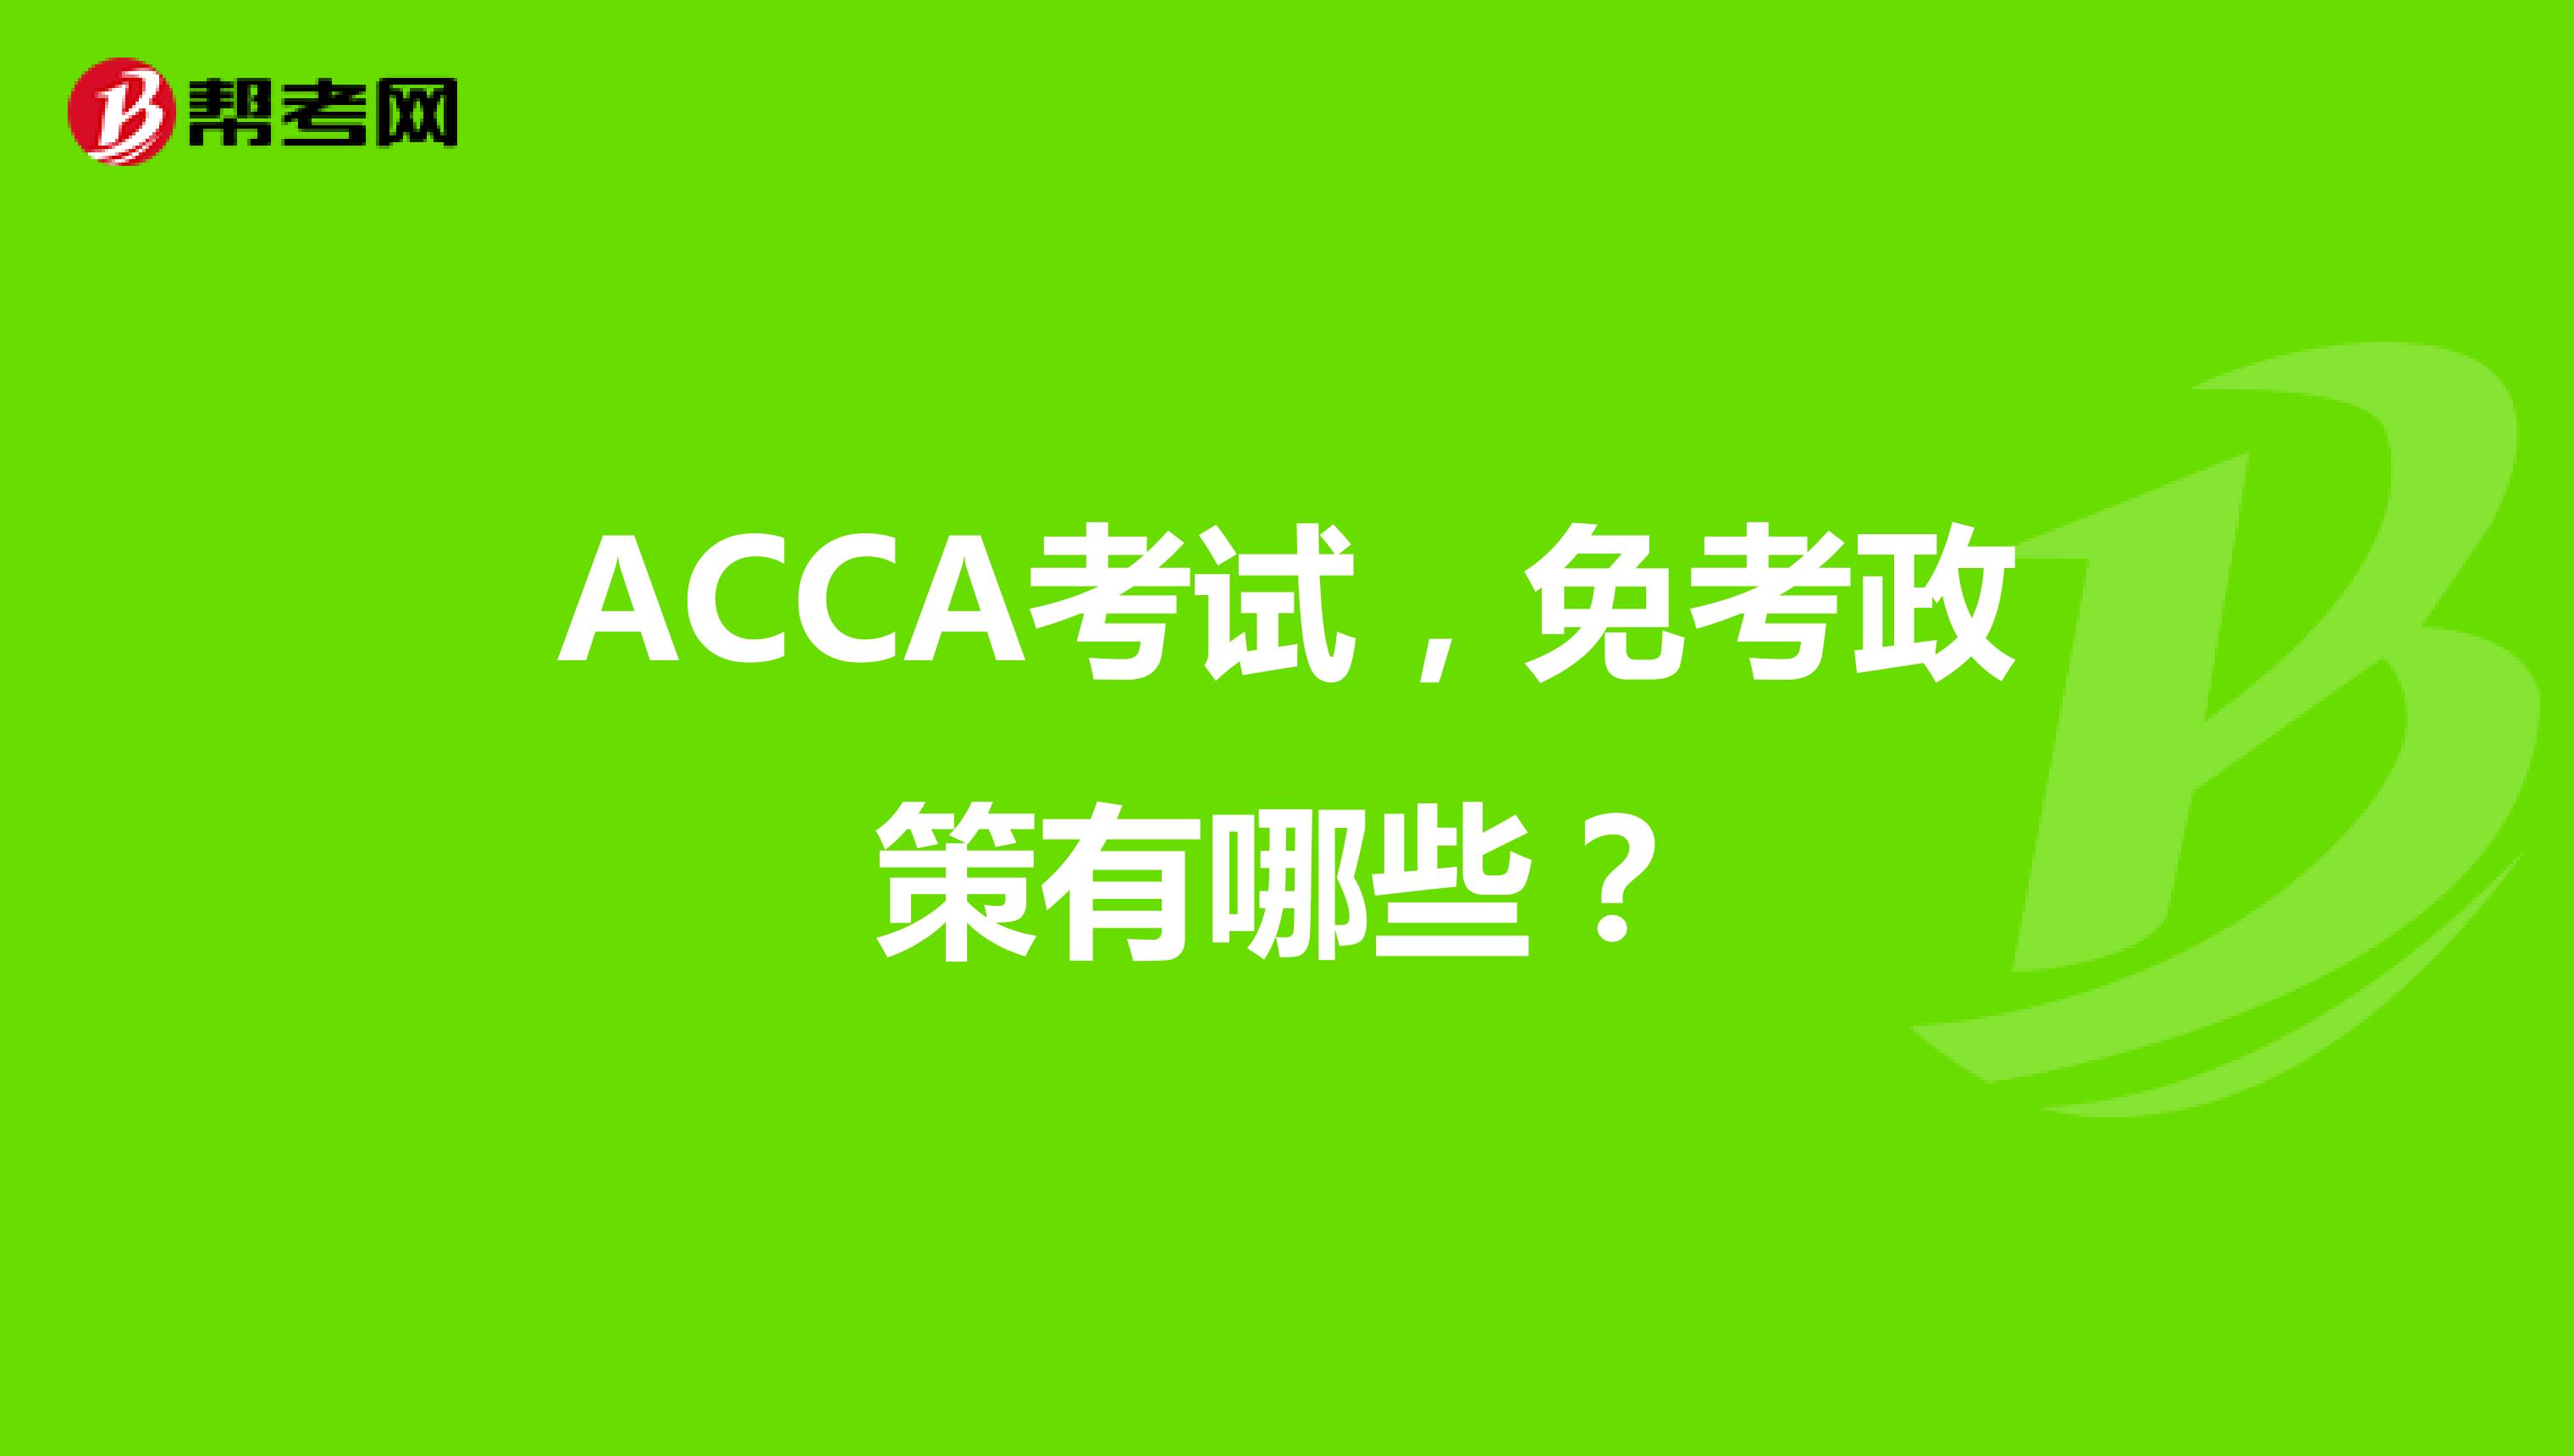 ACCA考试，免考政策有哪些？